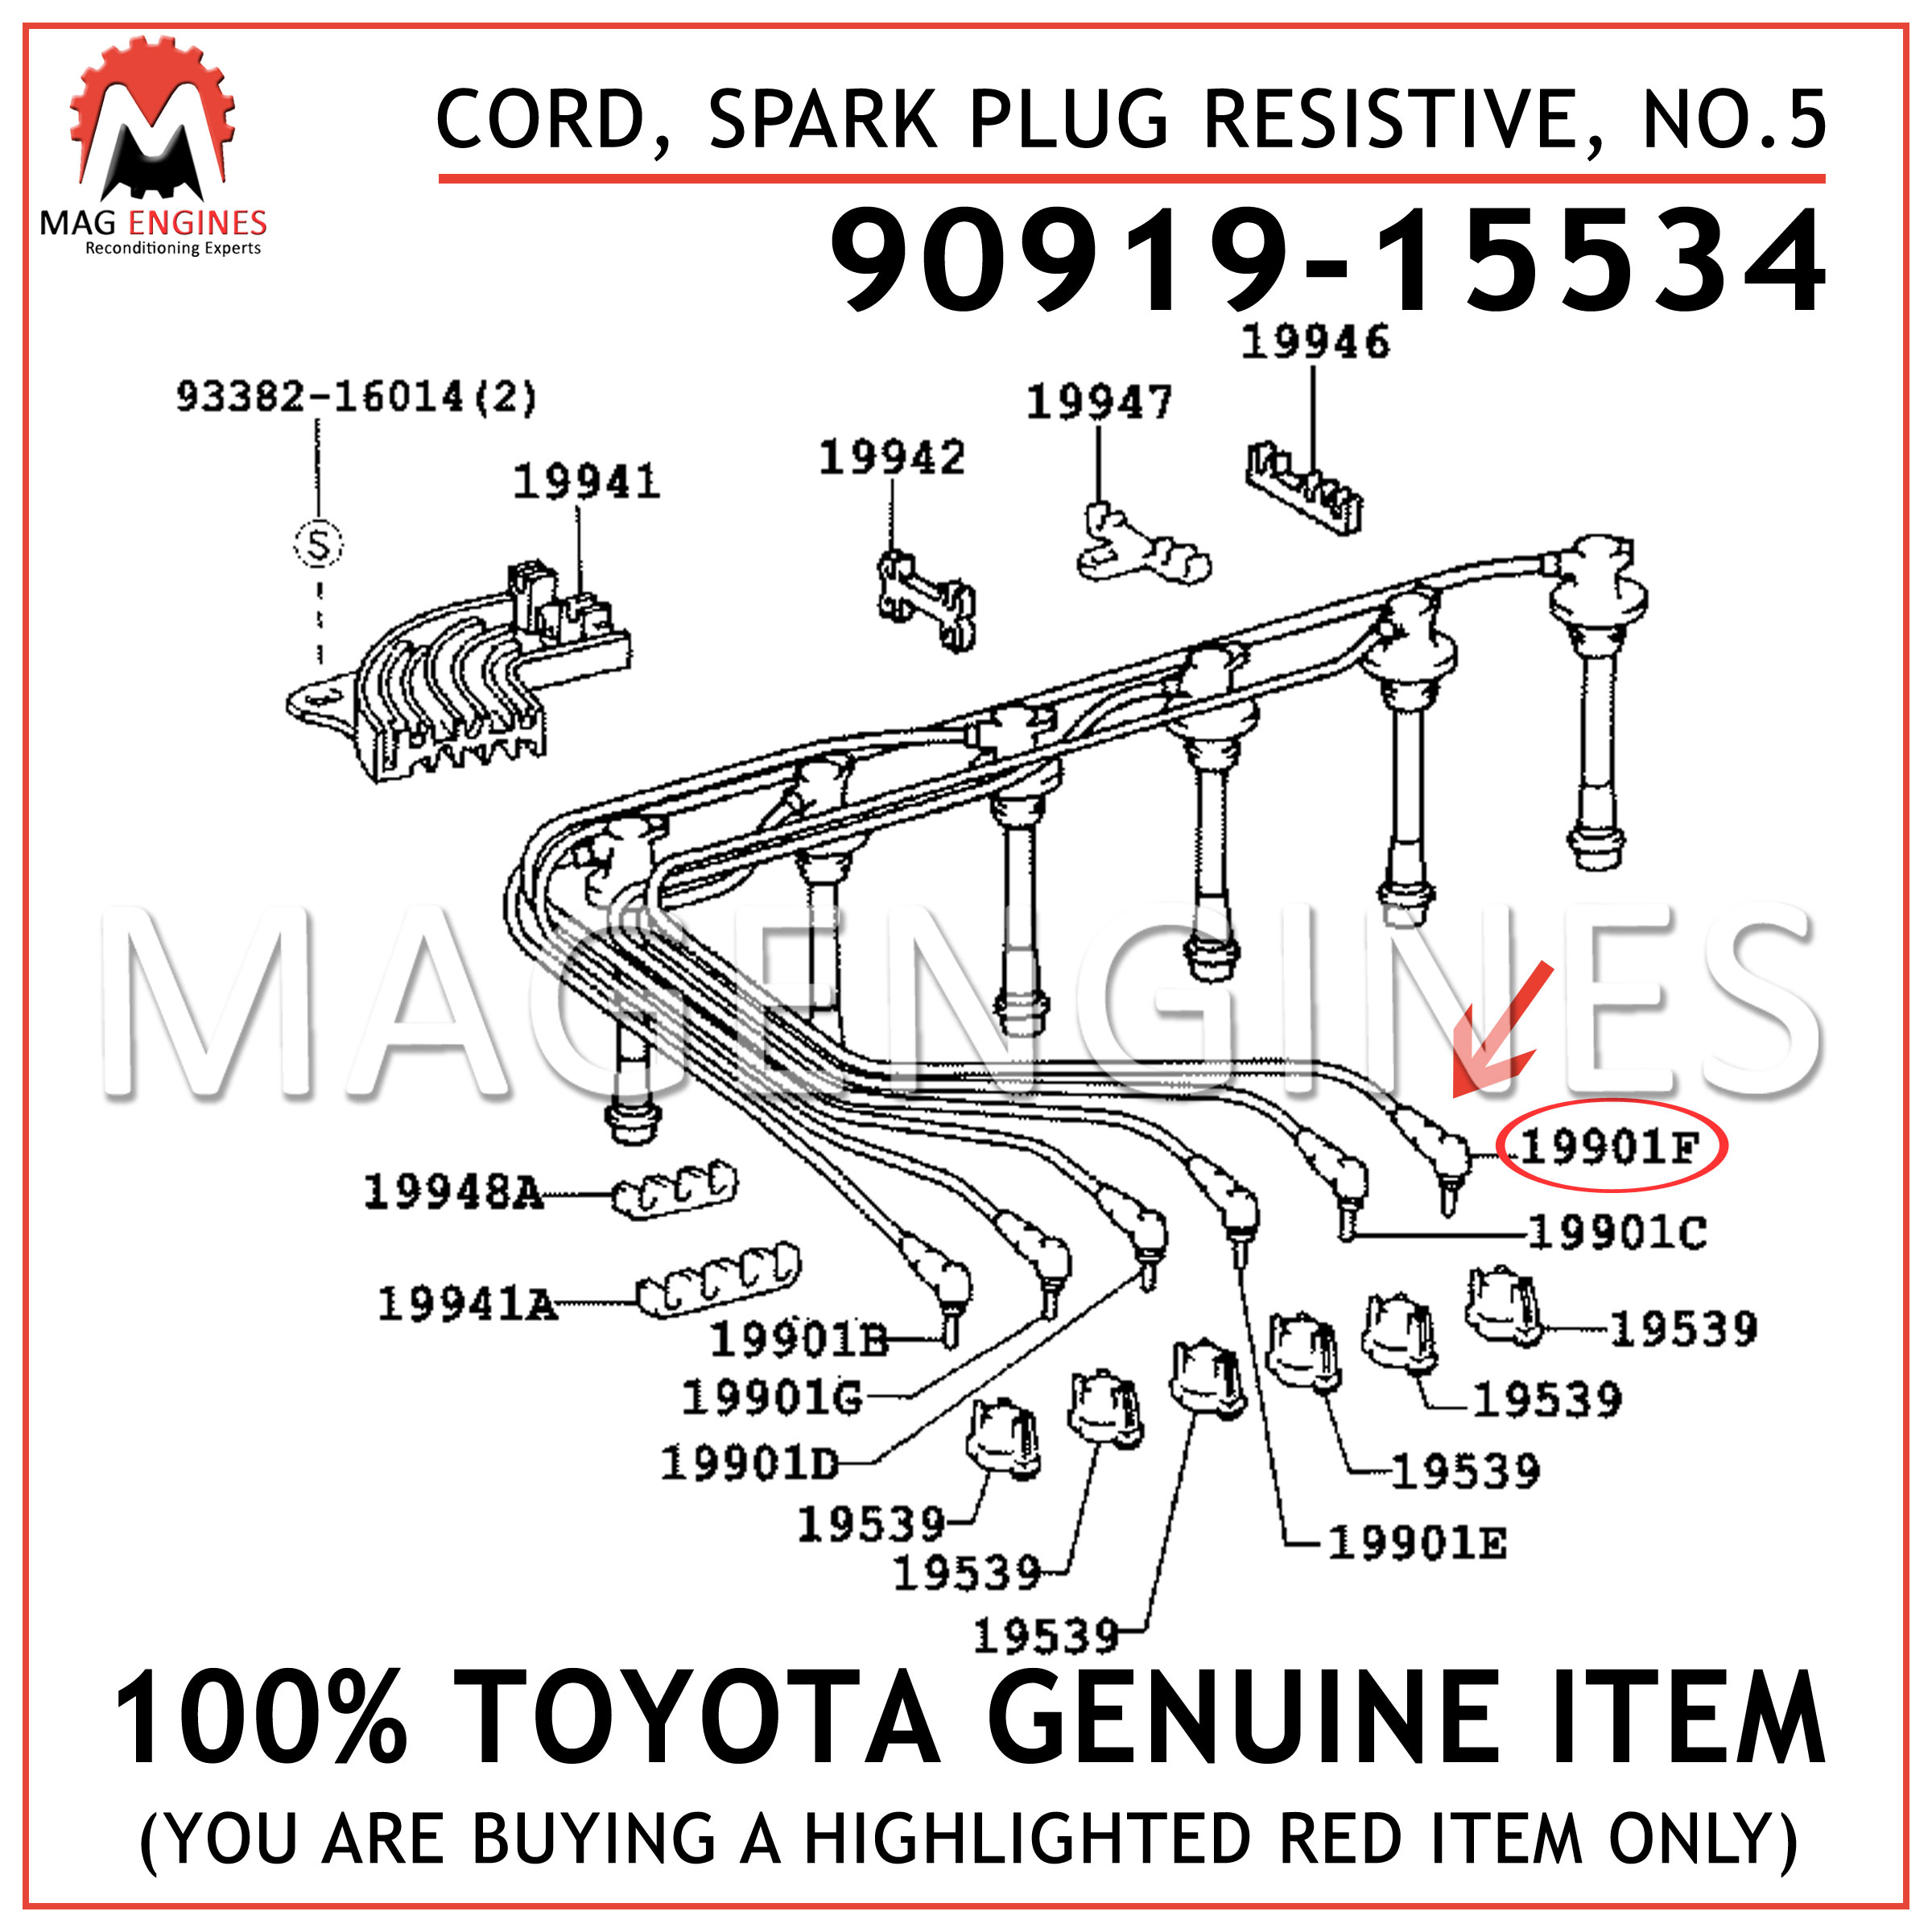 Toyota 90919-15253 Spark Plug Resistive Cord 